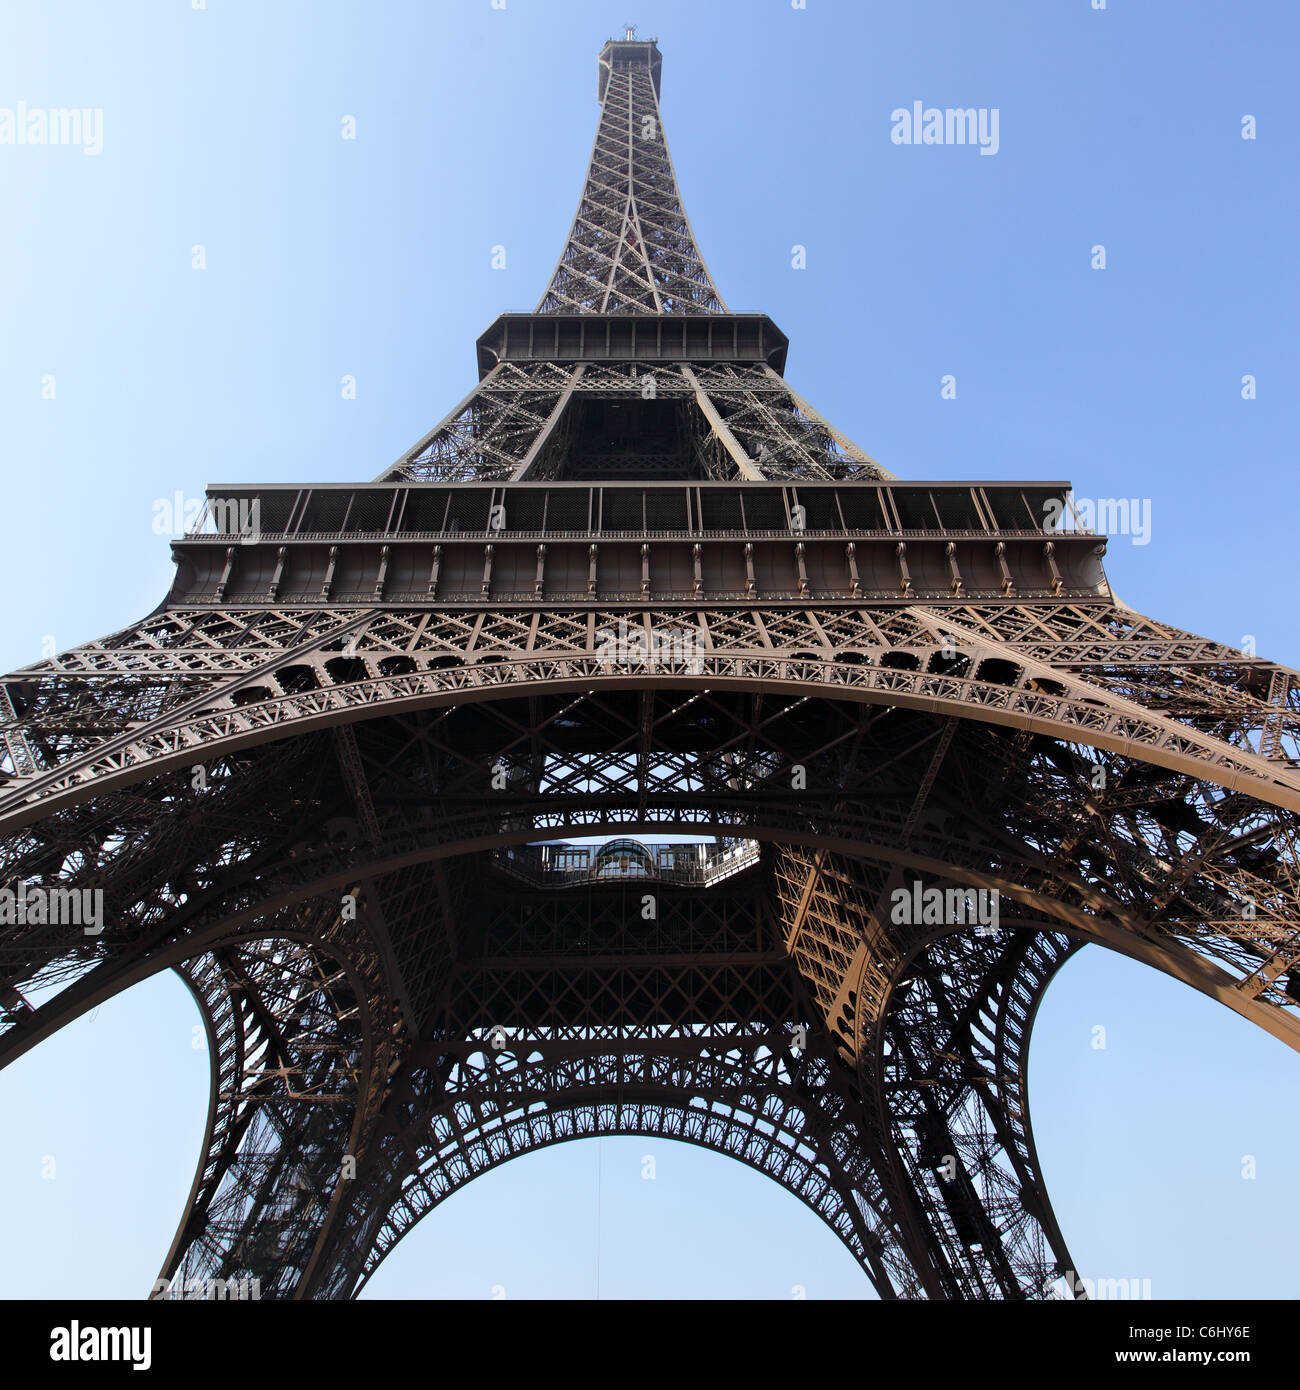 Eiffel tower close-up against blue sky, Paris, France. Stock Photo